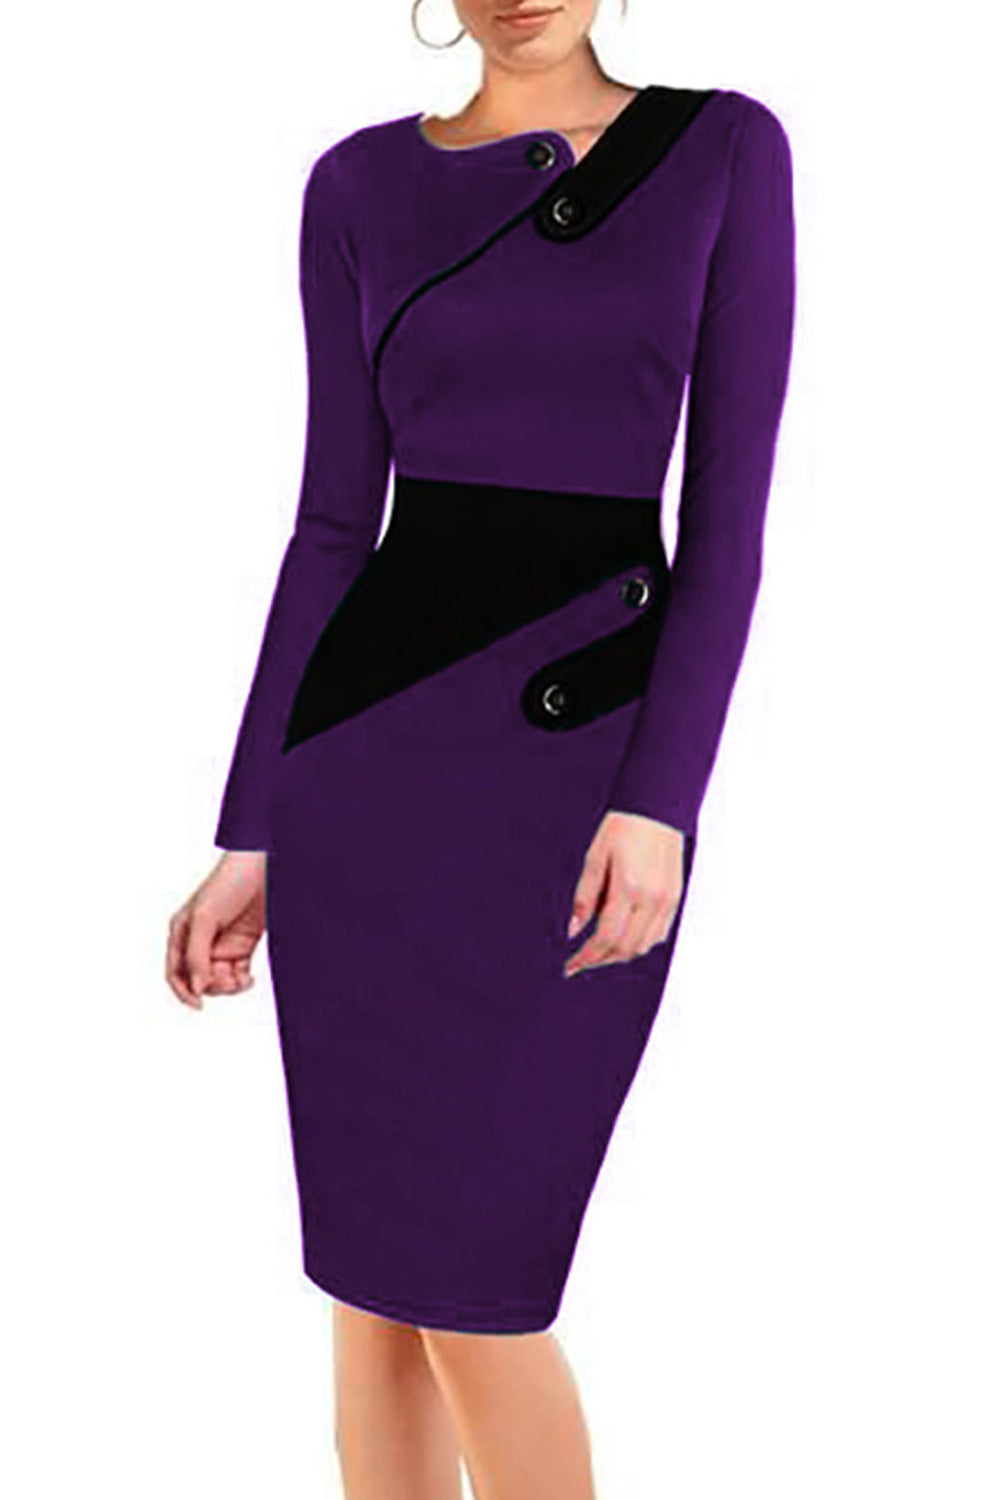 Ketty More Women Bodycon Long Sleevess Slim Evening Formal Dress-KMWD367